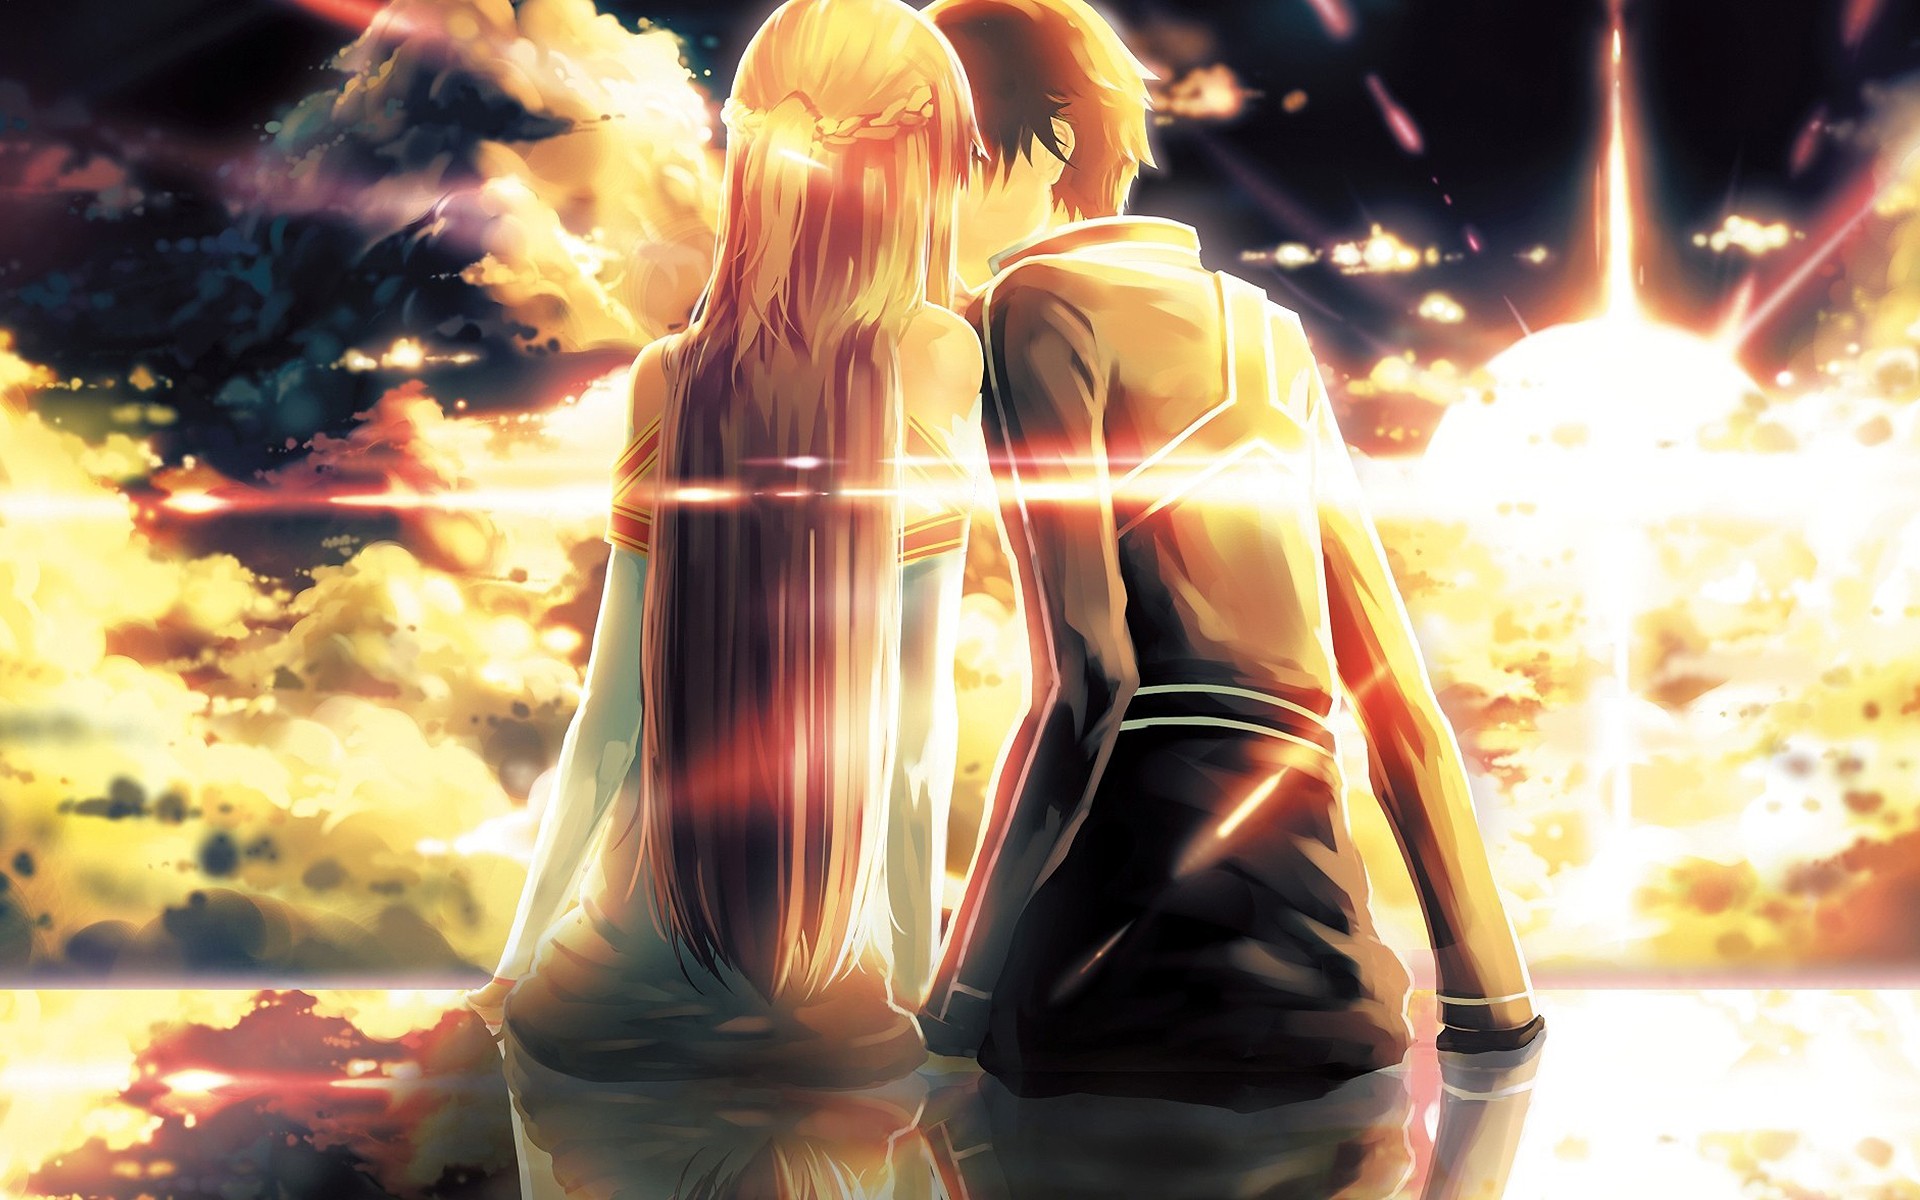 Anime 1920x1200 anime anime girls Sword Art Online kissing long hair Sun sky clouds anime boys outdoors Yuuki Asuna (Sword Art Online) Kirigaya Kazuto (Sword Art Online) couple